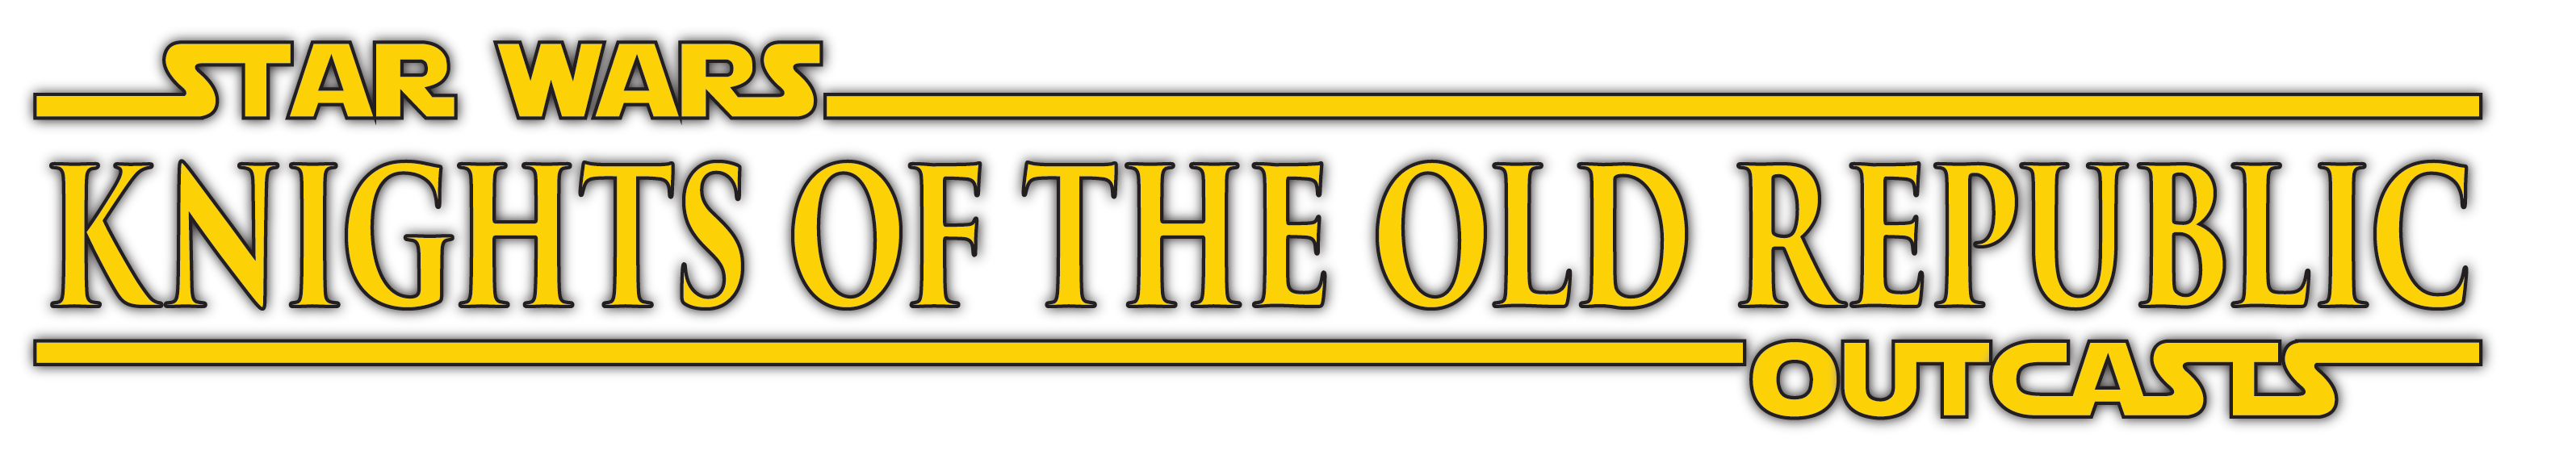 Outcasts logo